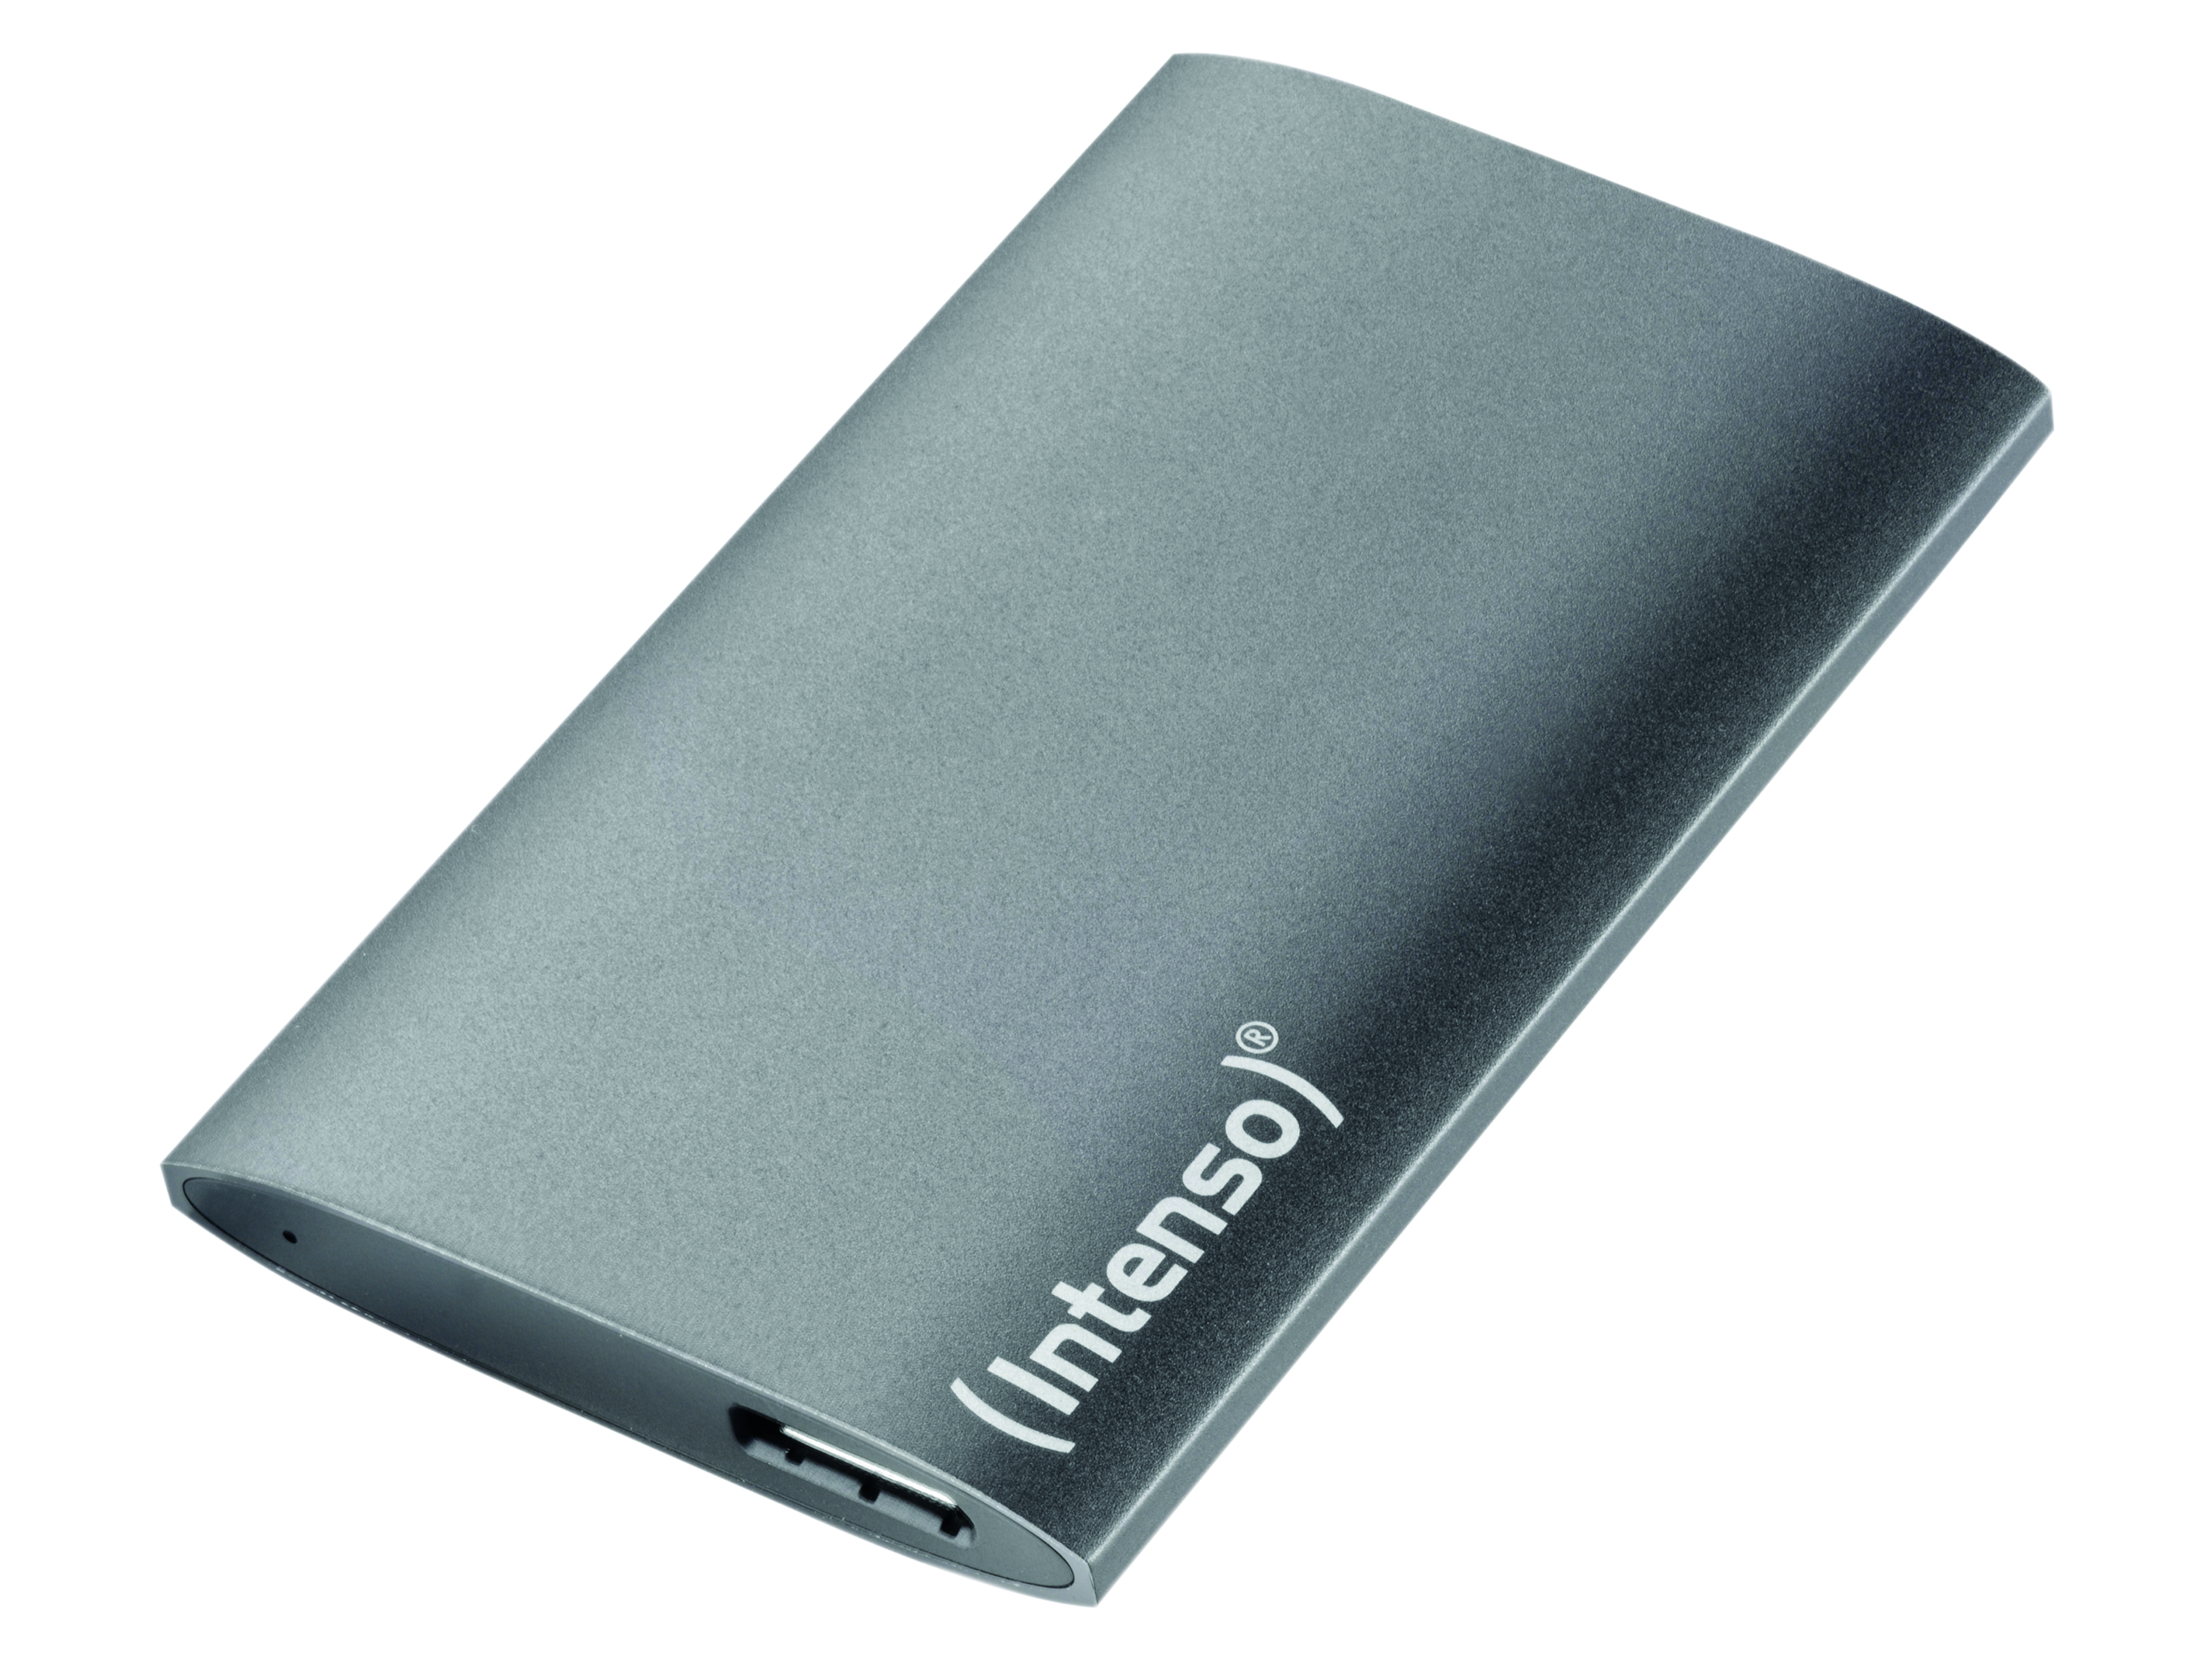 INTENSO Externe SSD Premium, 2 TB, anthrazit